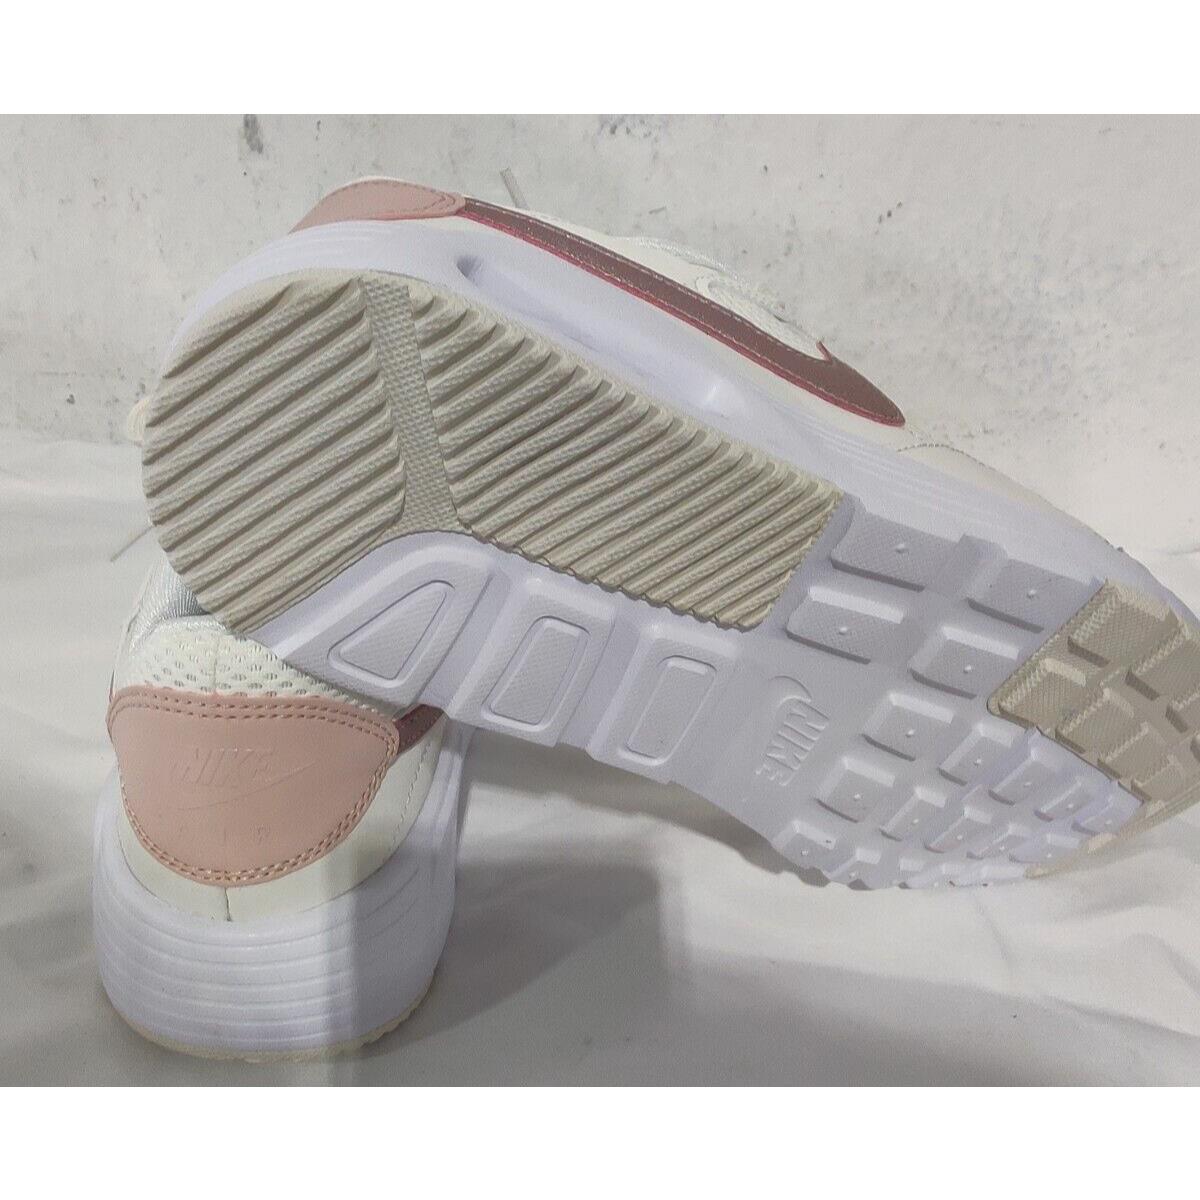 Nike shoes Air Max - Pink 2